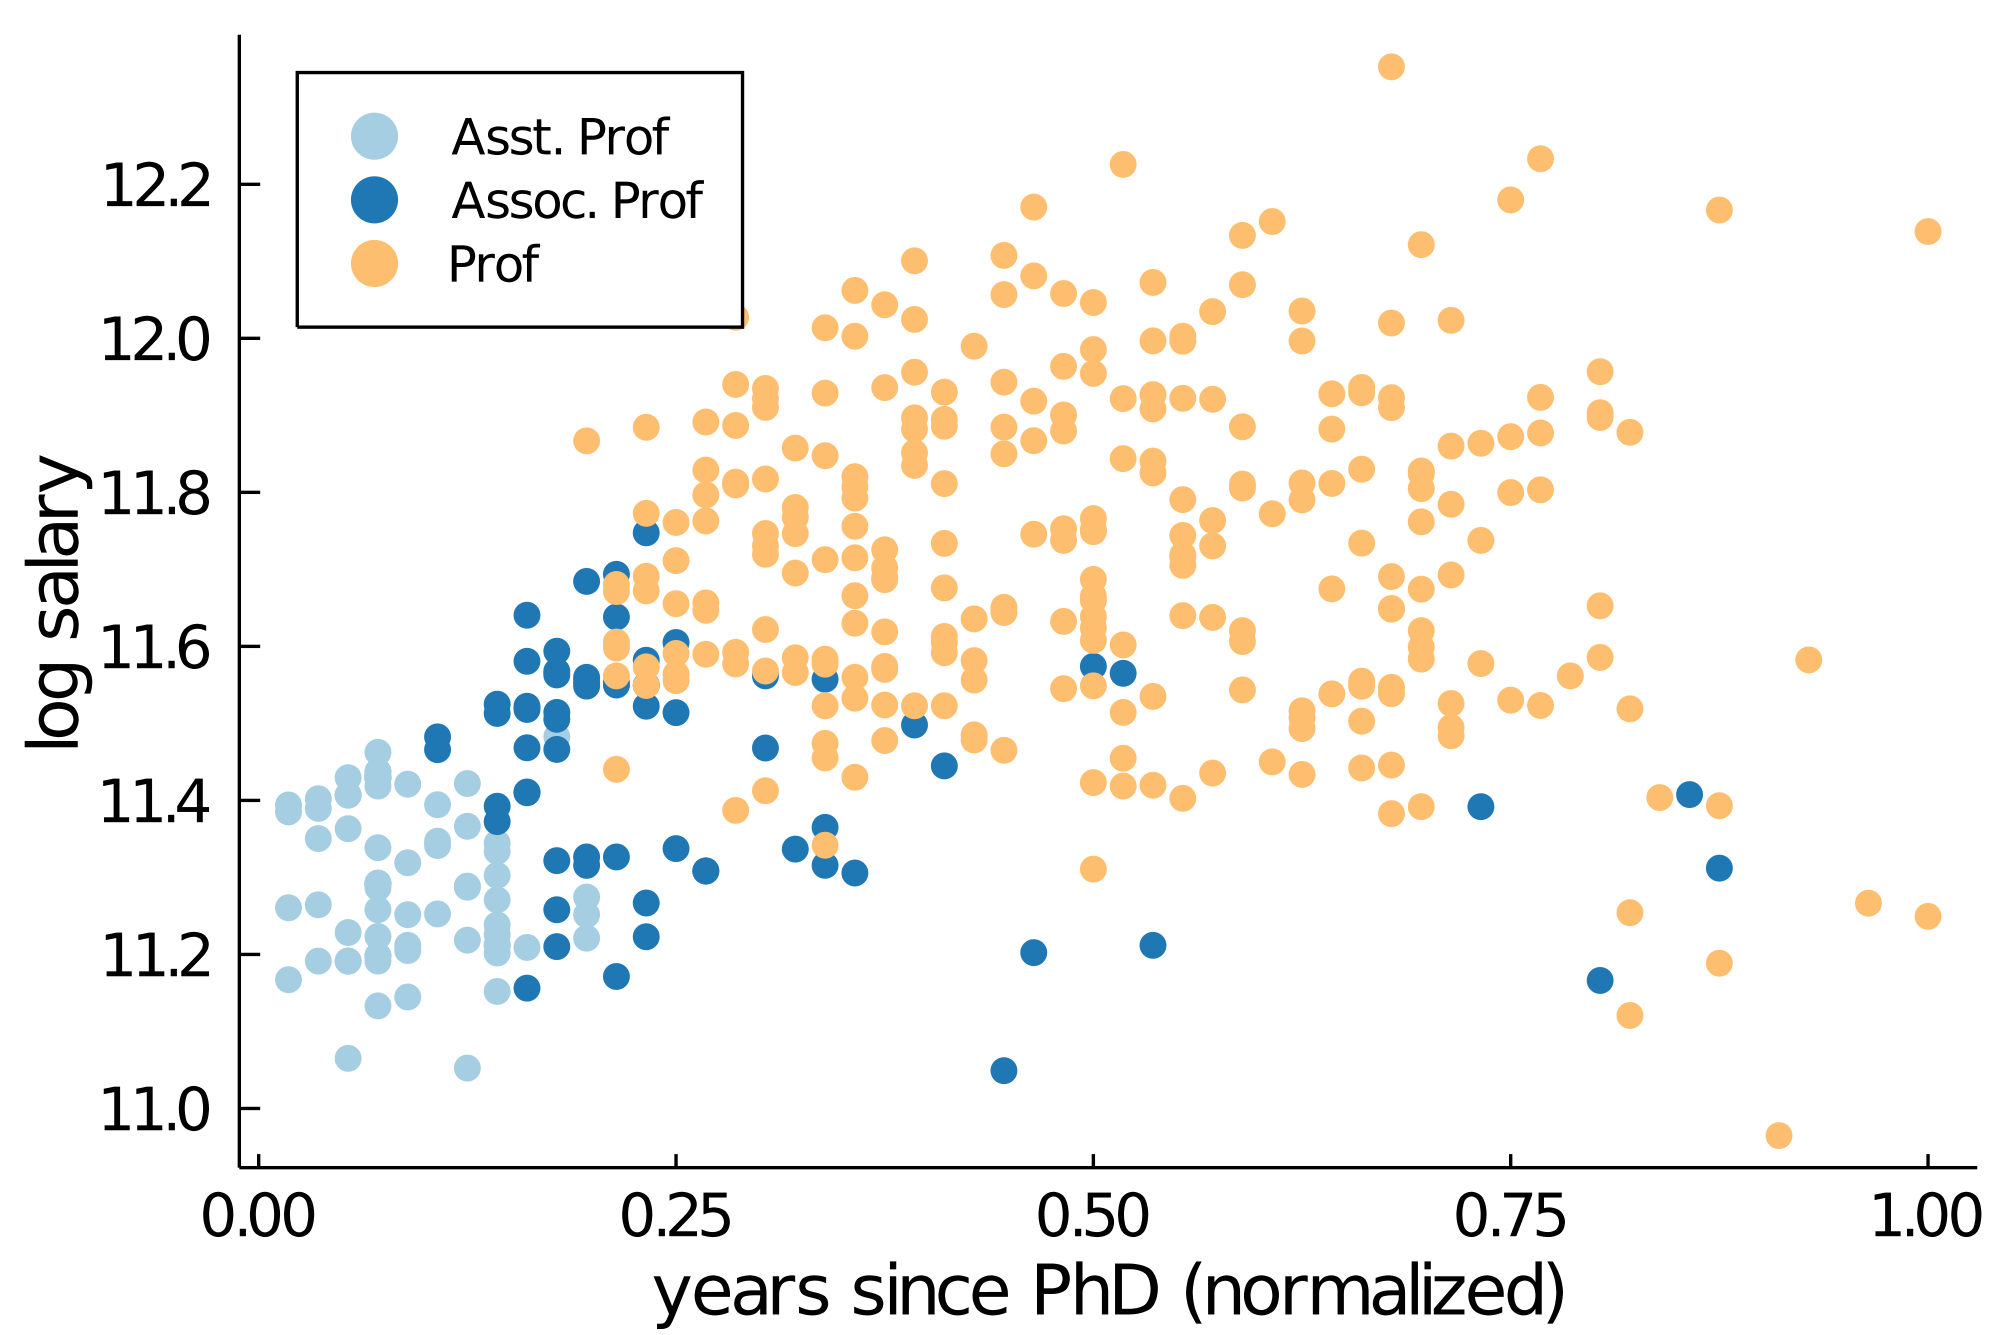 regression data salary vs years since PhD